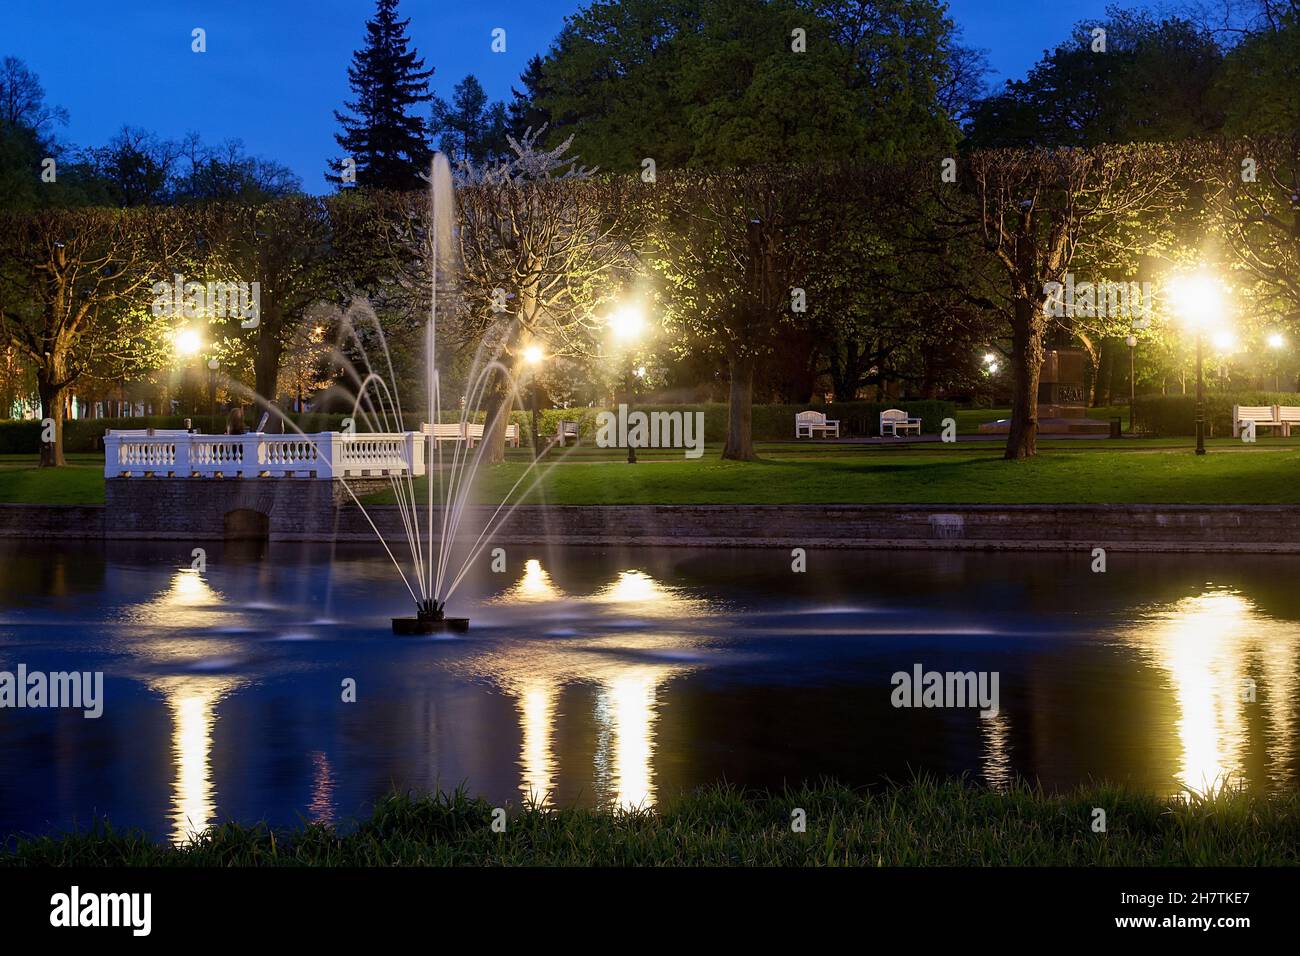 A fountain sprays the water of the Swan Lake in the Kadriorg park at Tallinn, Estonia on a quiet night. Stock Photo